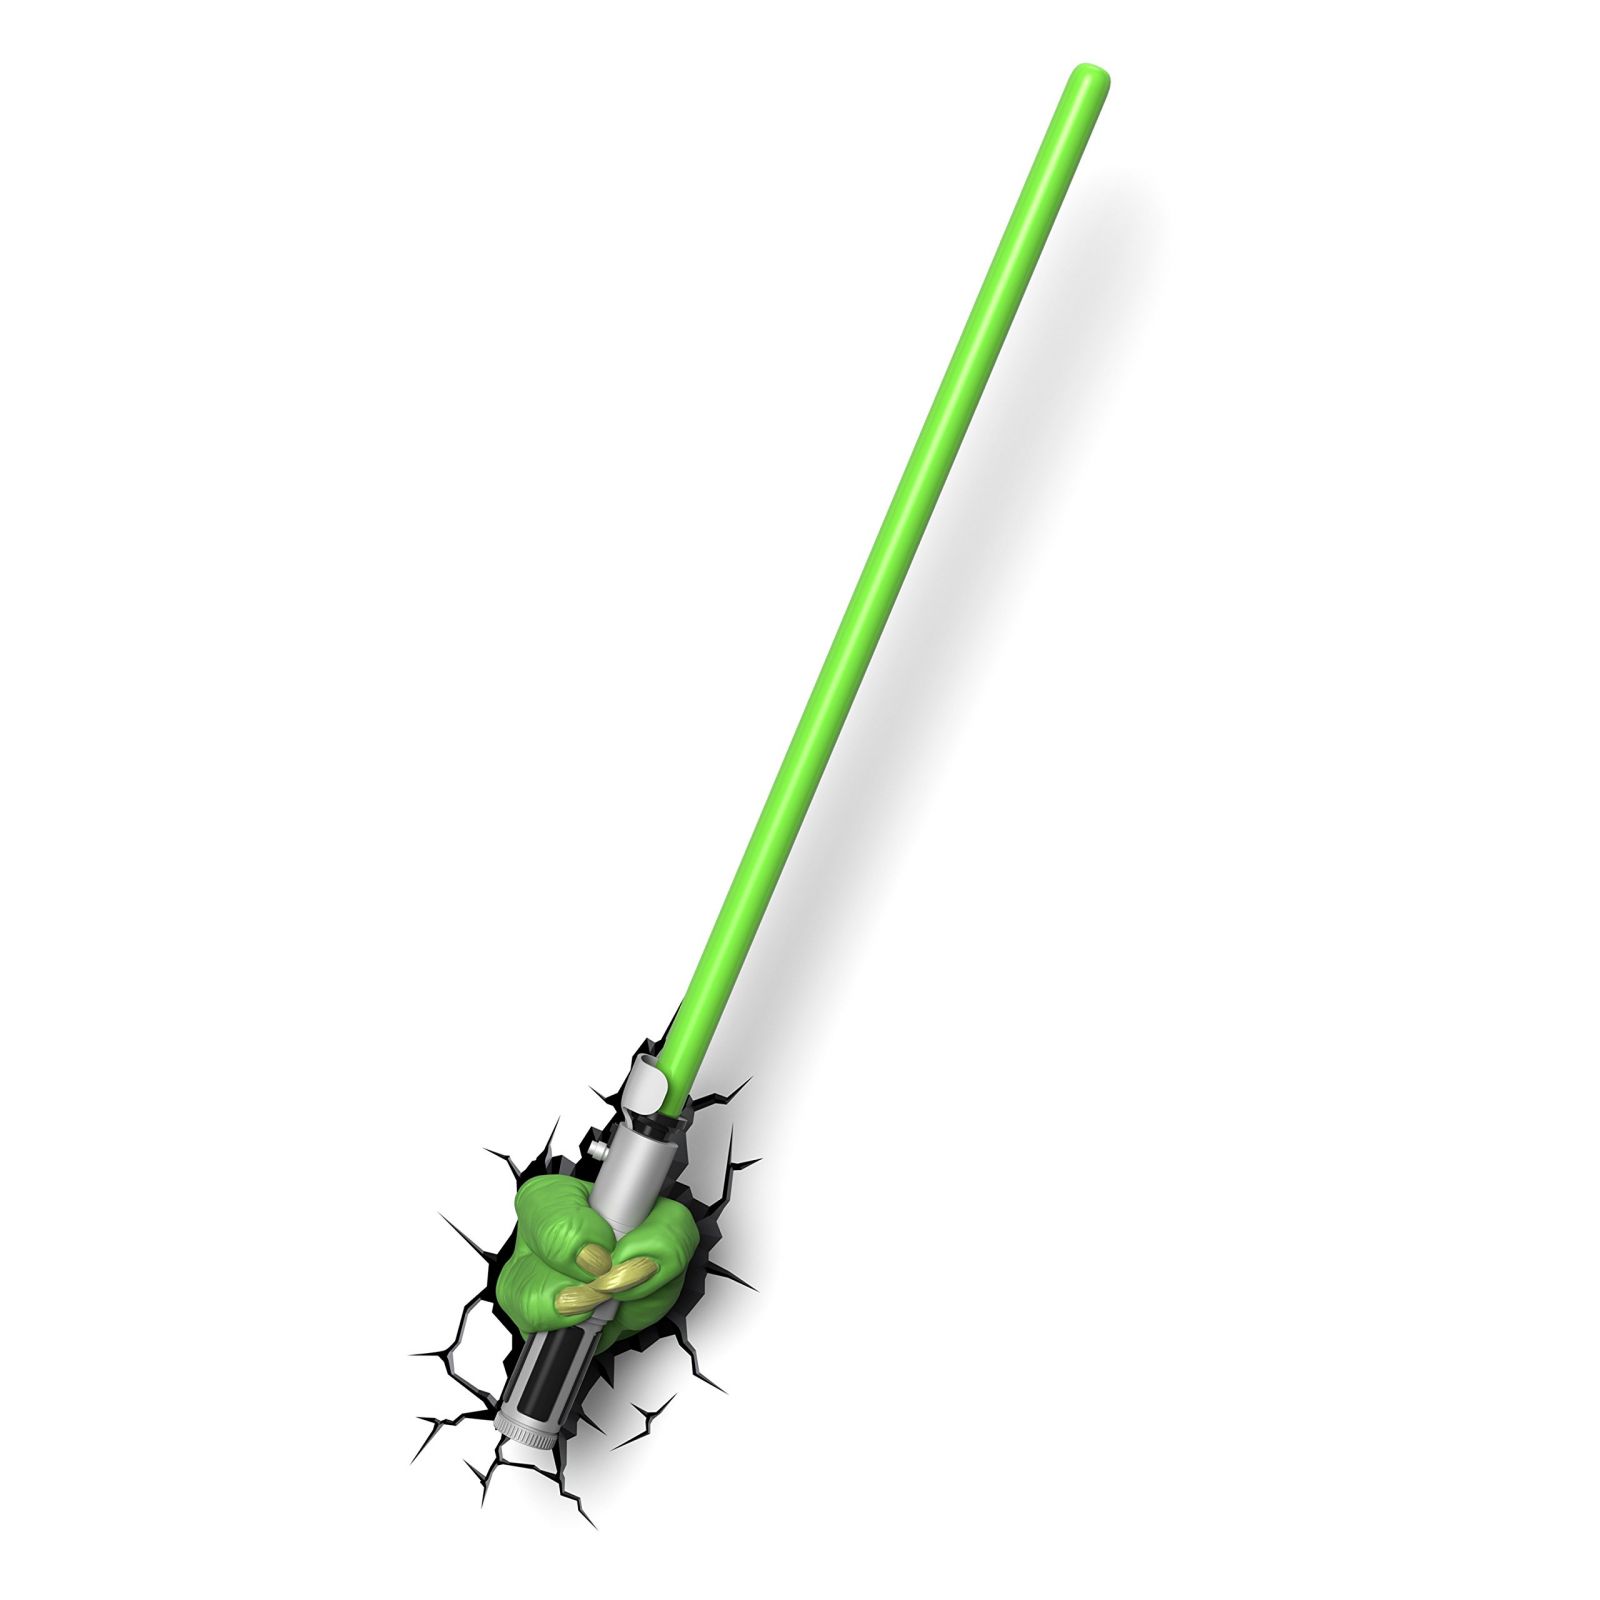 Yoda Lightsaber 3D LED Light Star Wars 3Dlight